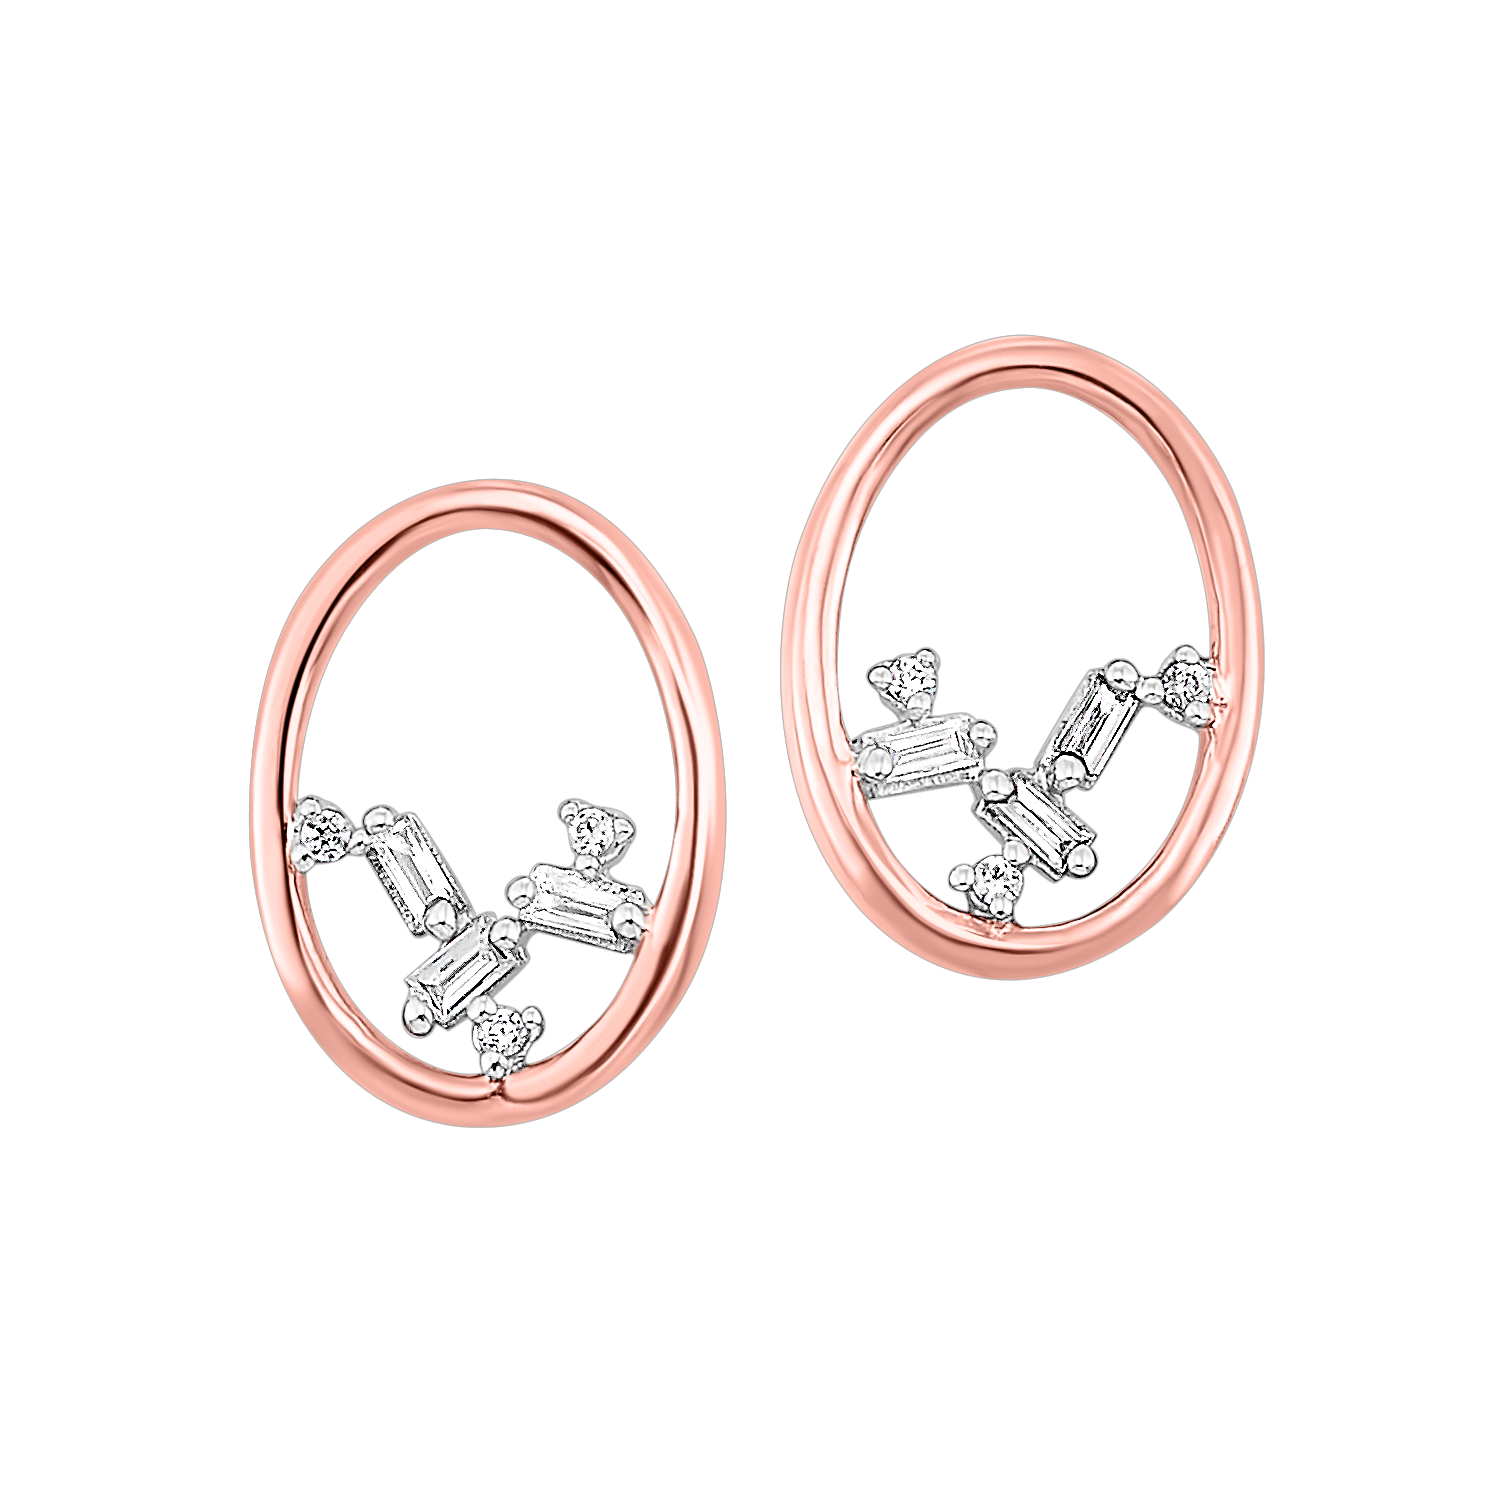 BW James Jewelers Earrings 16 Page Christmas Catalog Offer 14KTR Oval Earrings 1/20 Ctw